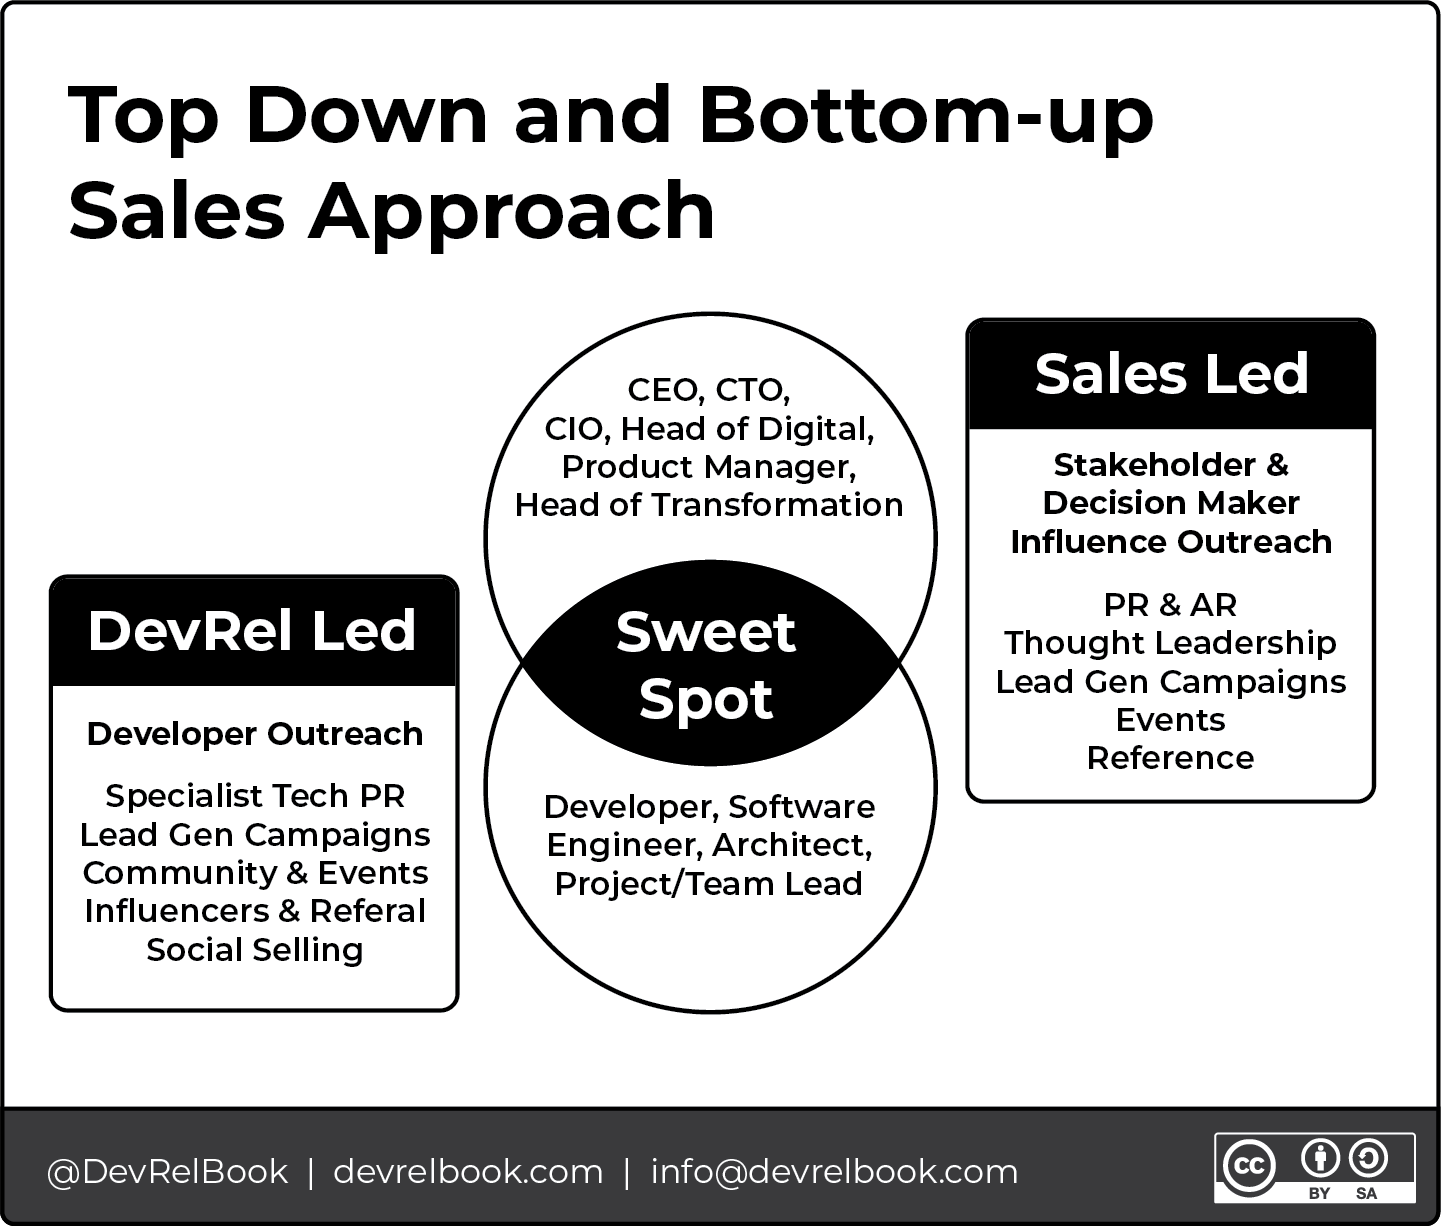 The Sweet Spot of DevRel and Sales, from Figure 24-1 in www.DevRelBook.com